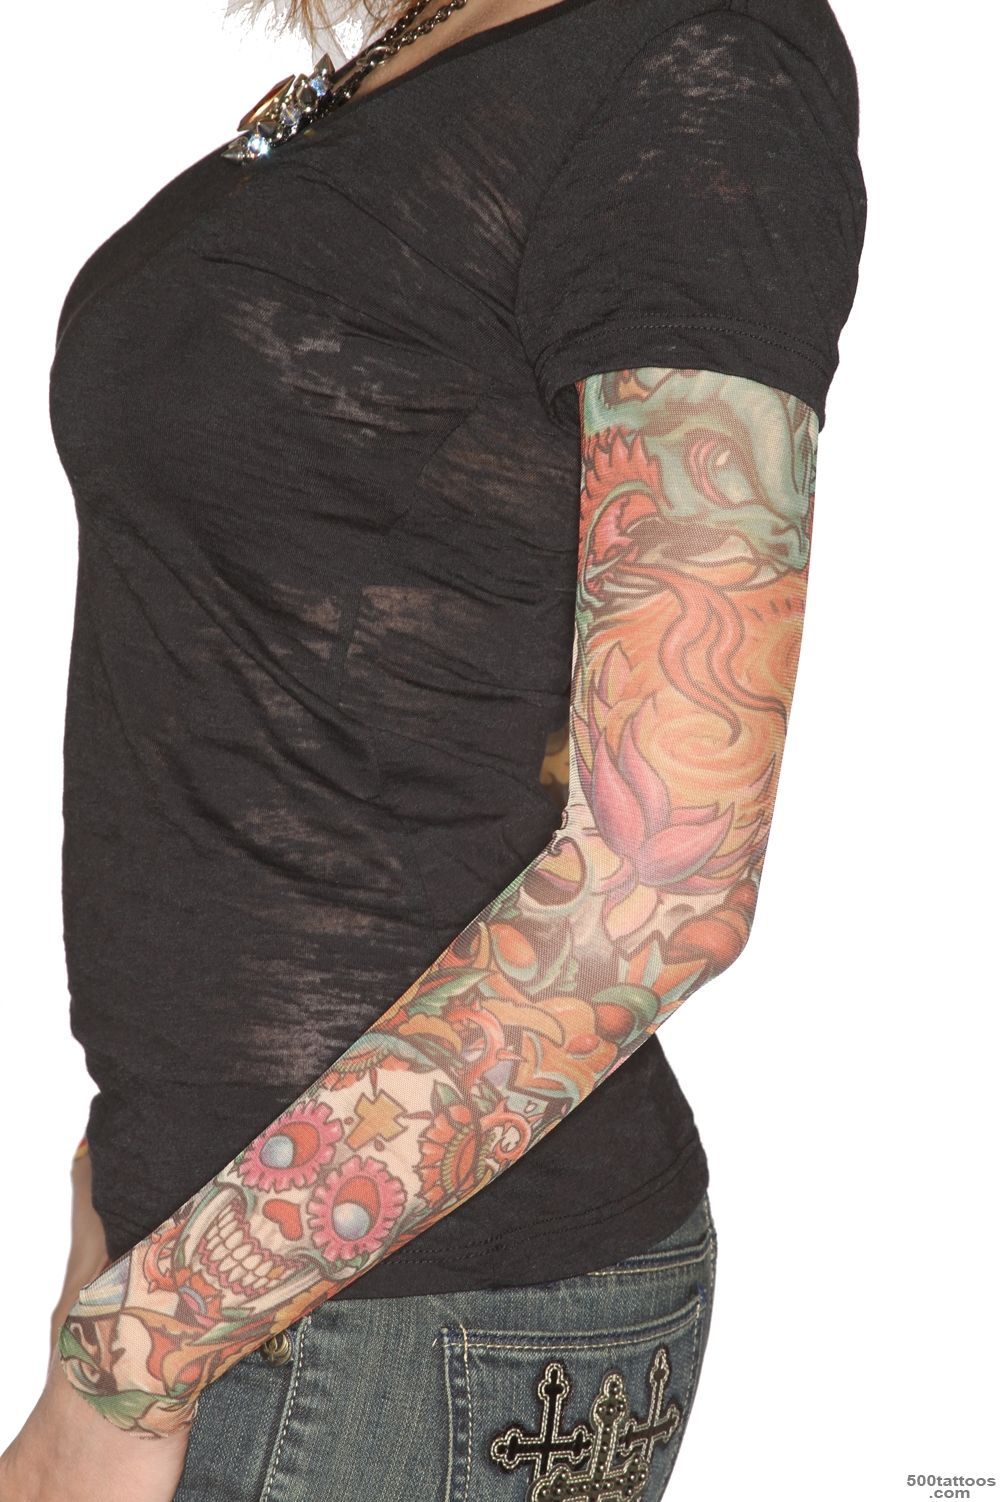 Wild rose tattoo shirts  Tattoo Collection_28